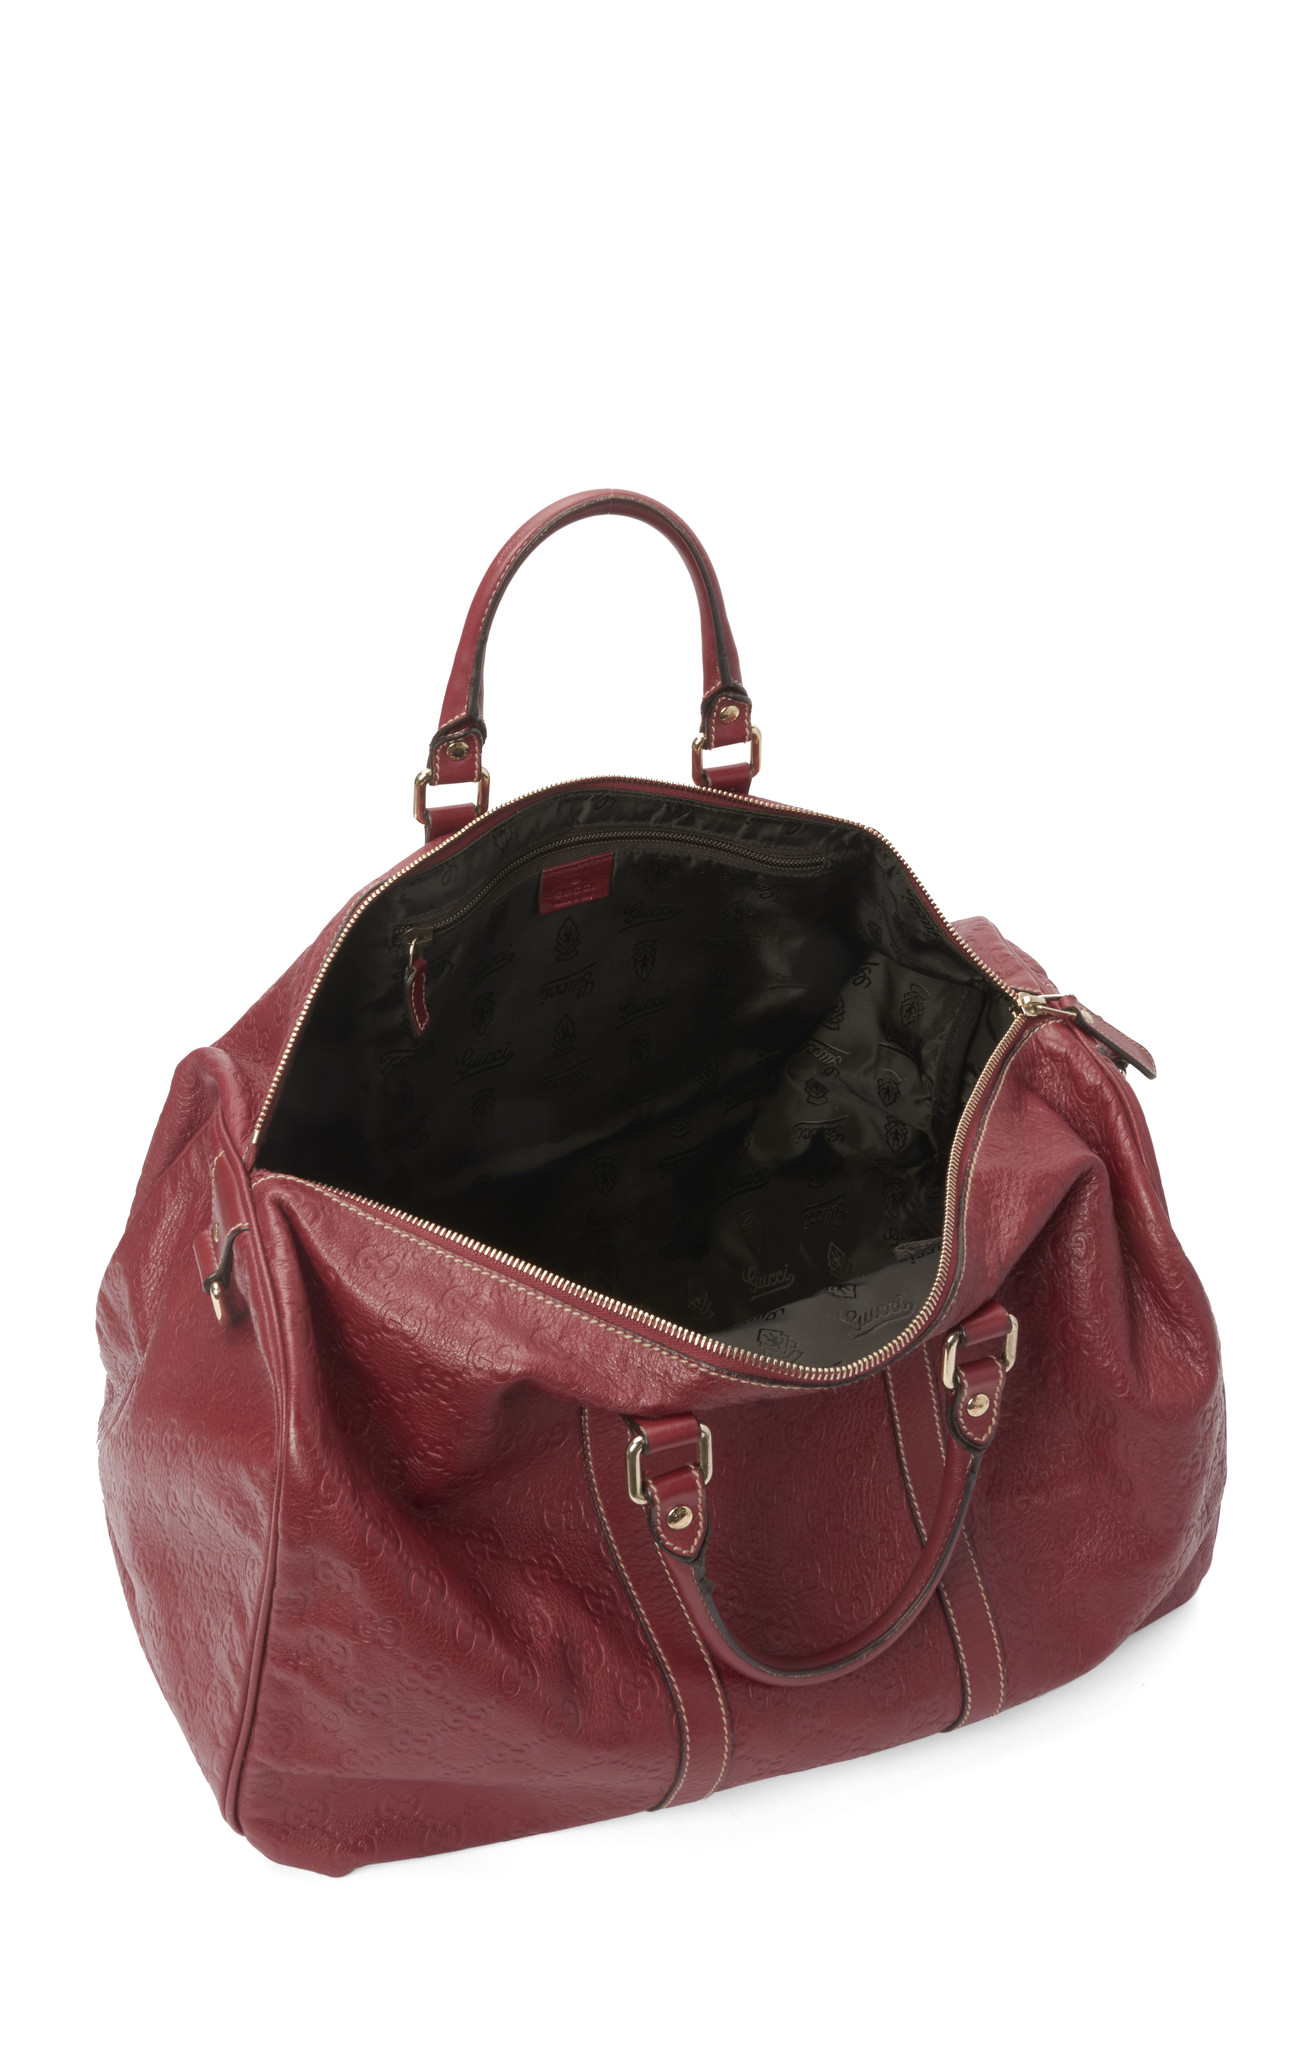 Gucci Red Guccissima Leather Duffle Bag - RETYCHE